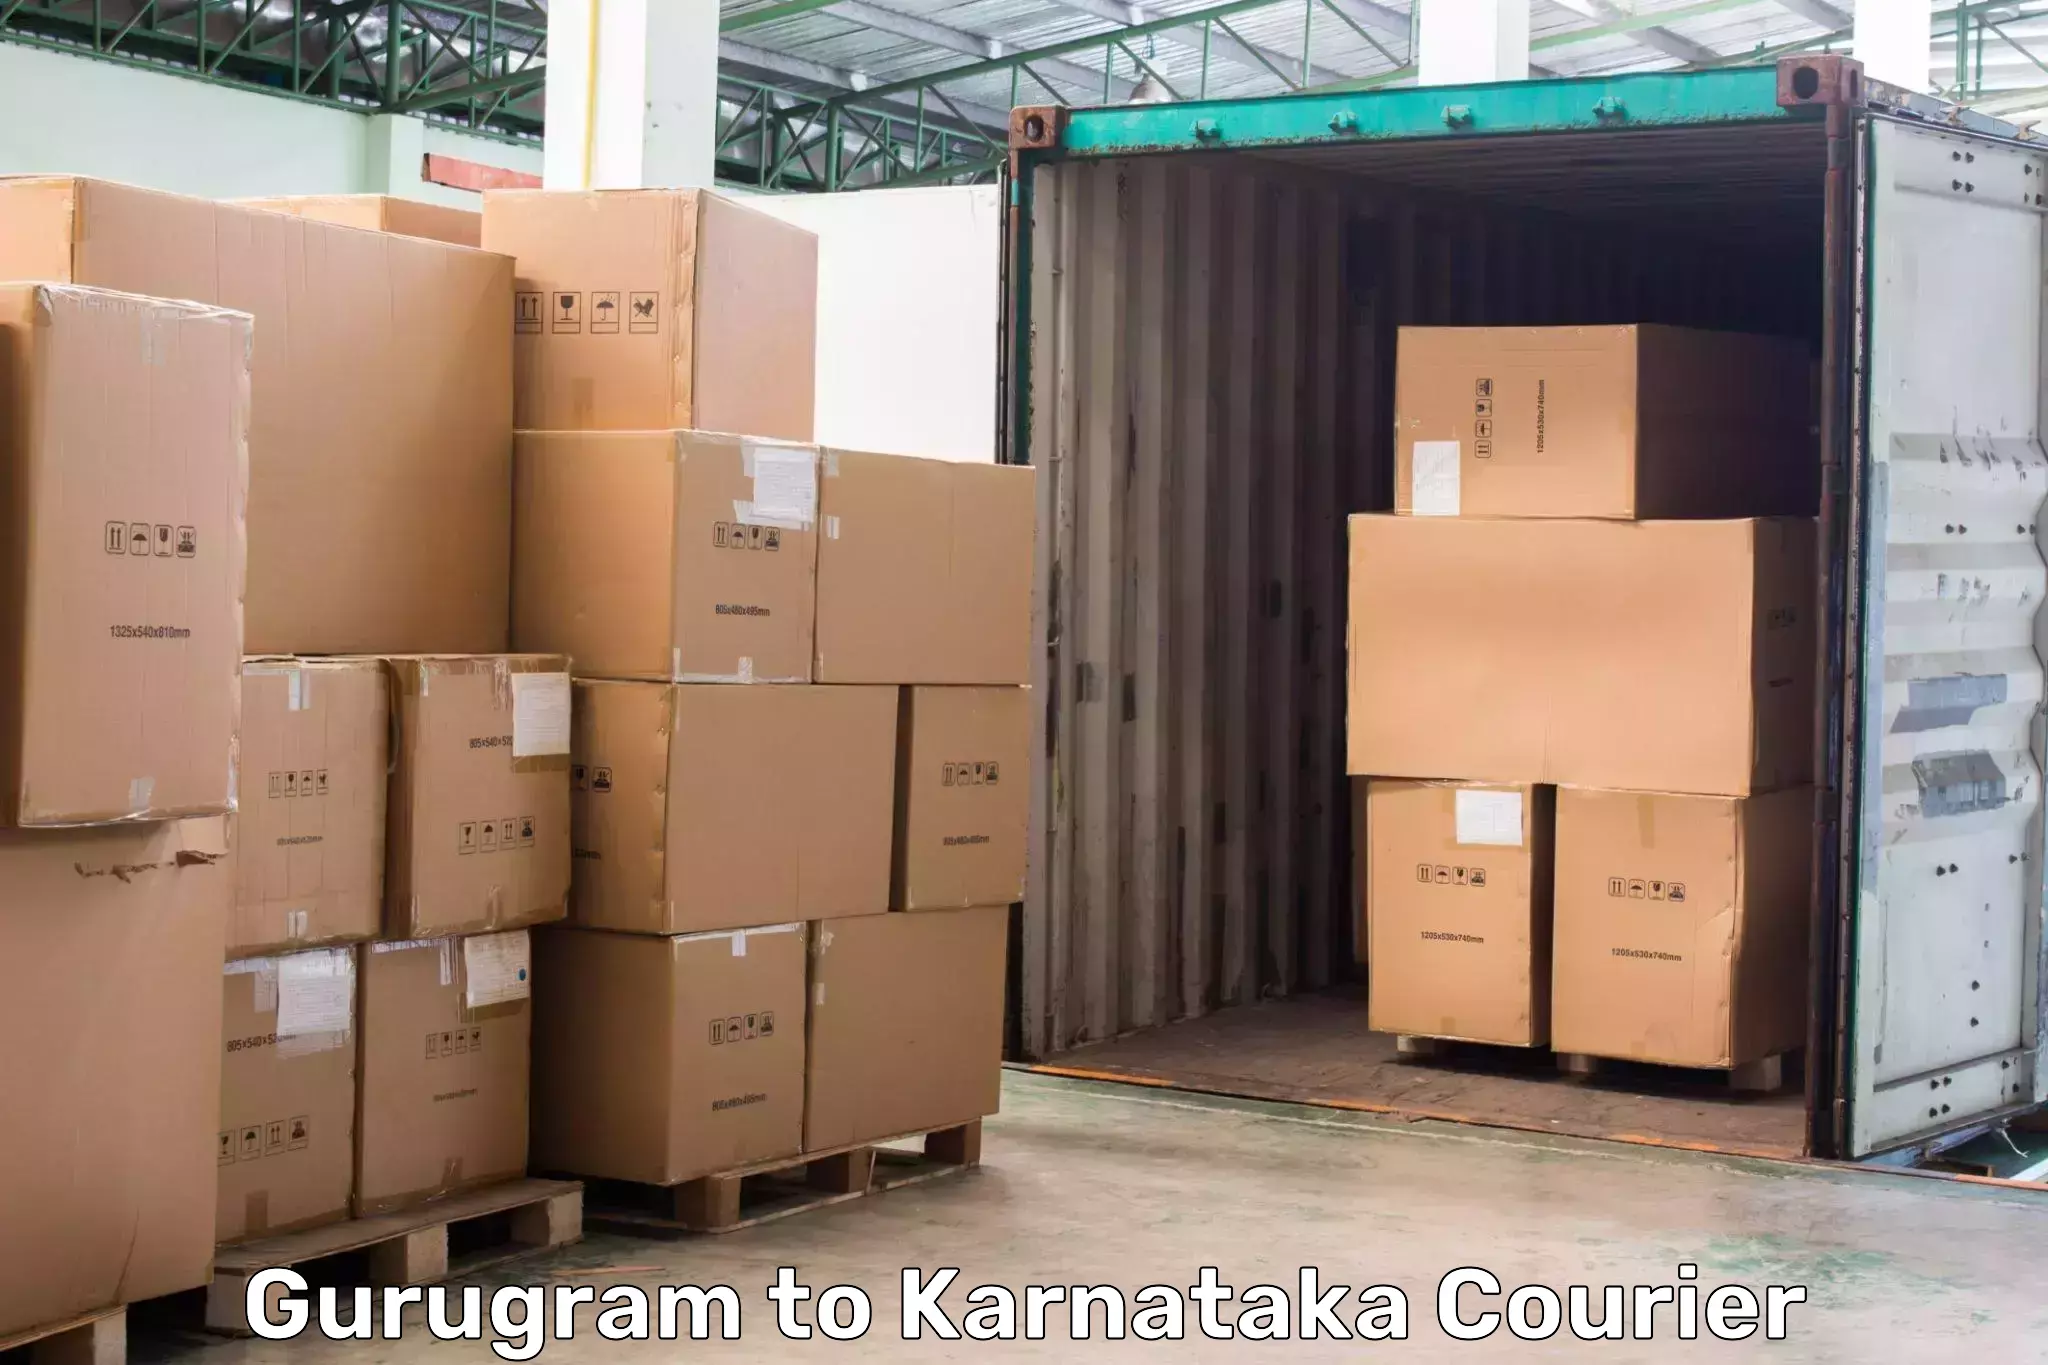 Courier service innovation Gurugram to Hanur